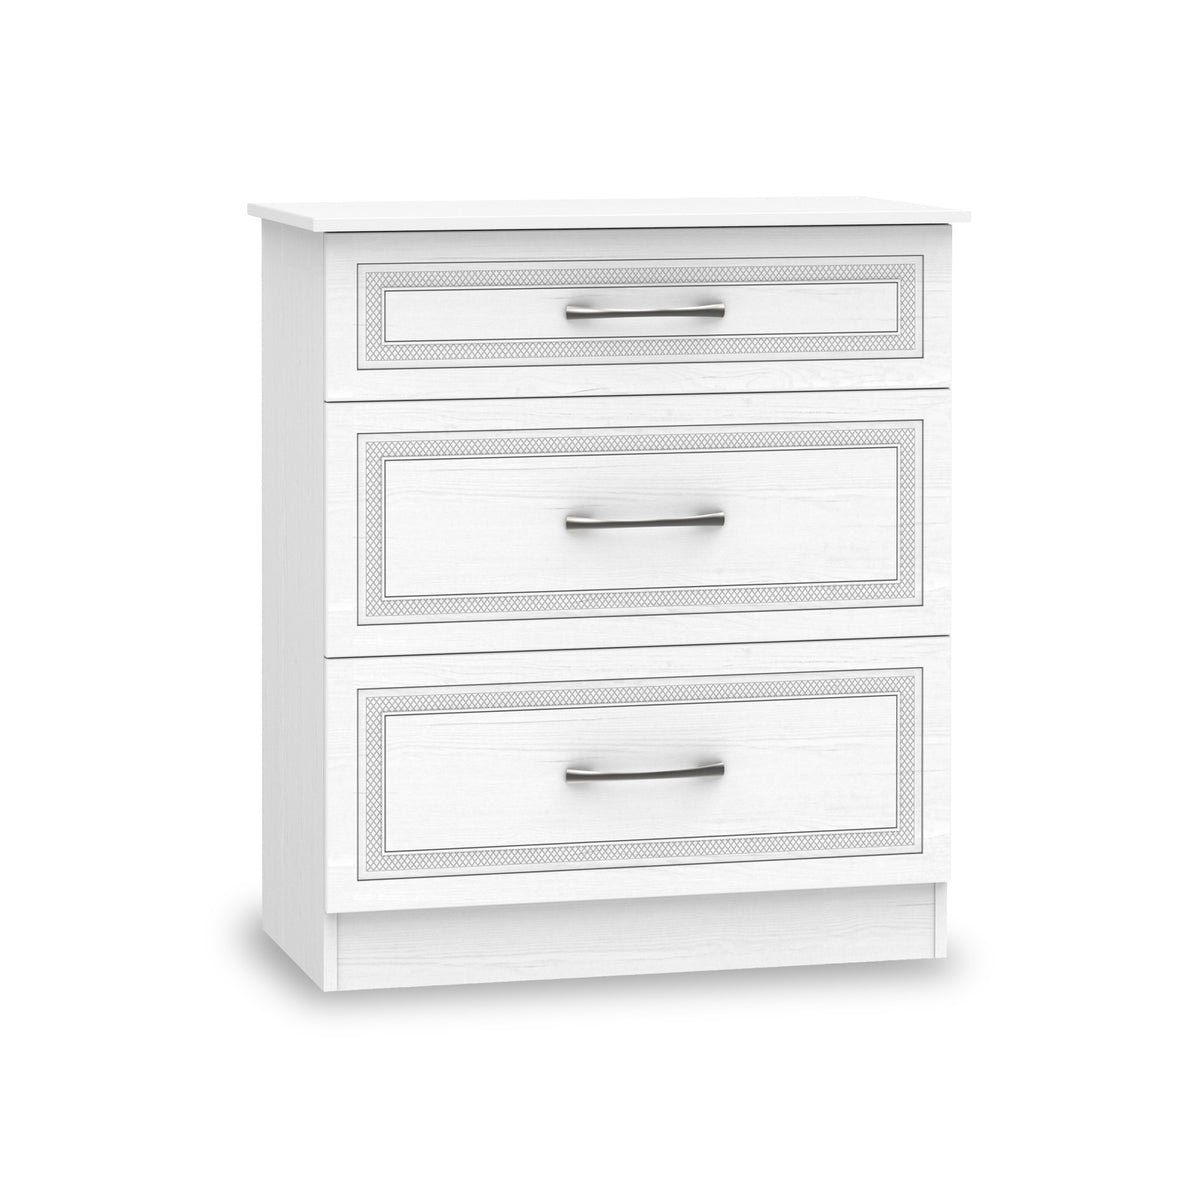 Kilgarth White 3 Drawer Deep Chest by Roseland Furniture